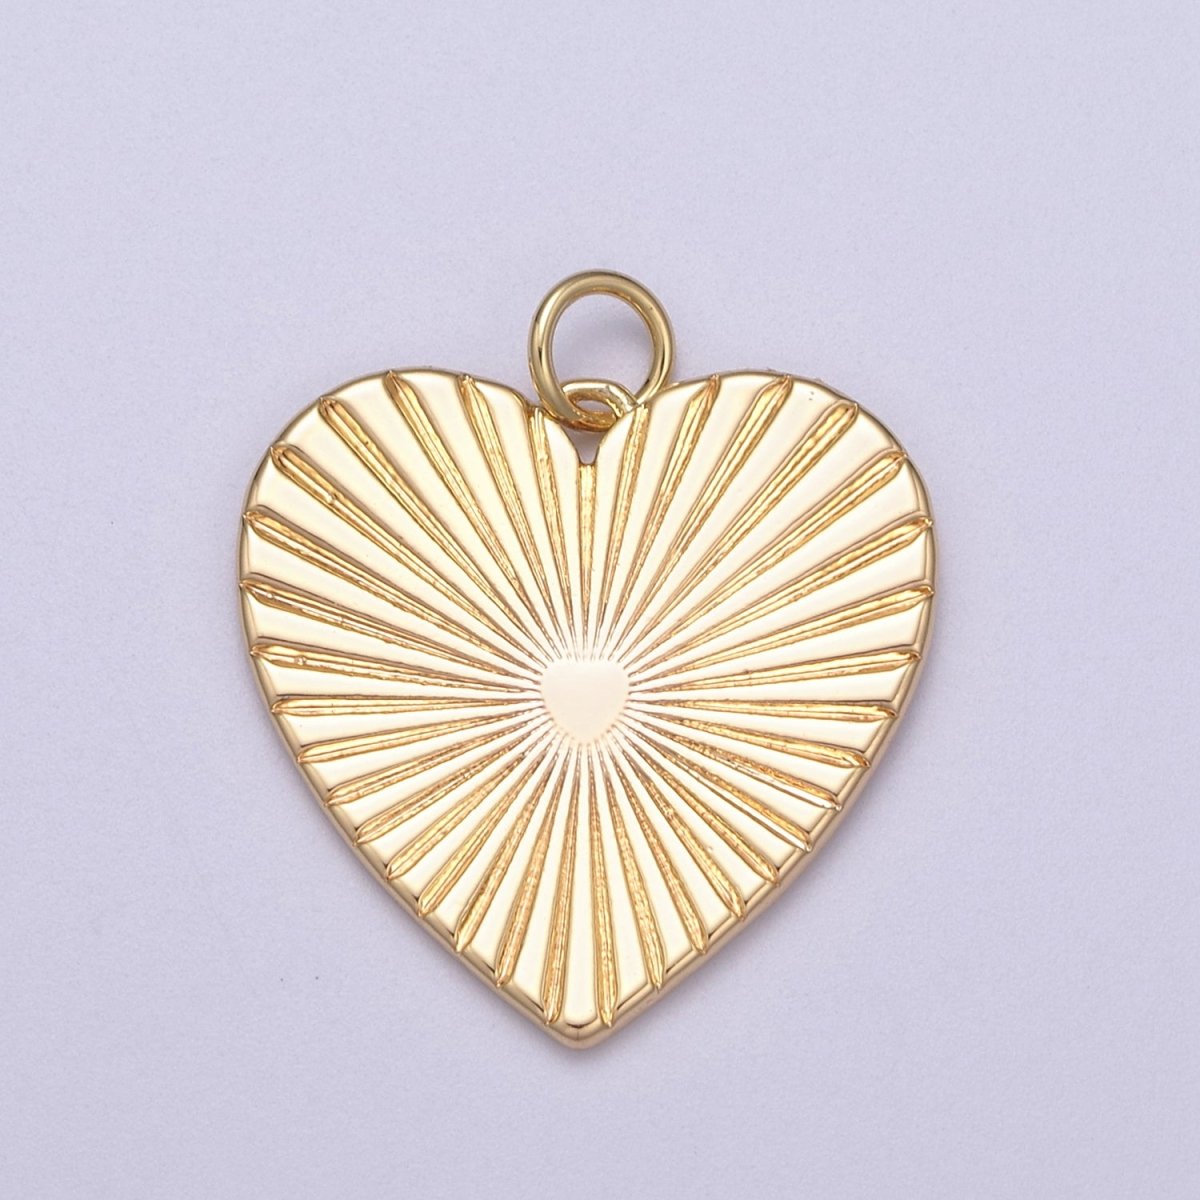 Dainty Sunburst Heart Charm, 16K Gold Filled Sunburst Heart Pendant, Women Sunburst Heart Pendant Jewelry N-271 AC-697 - DLUXCA